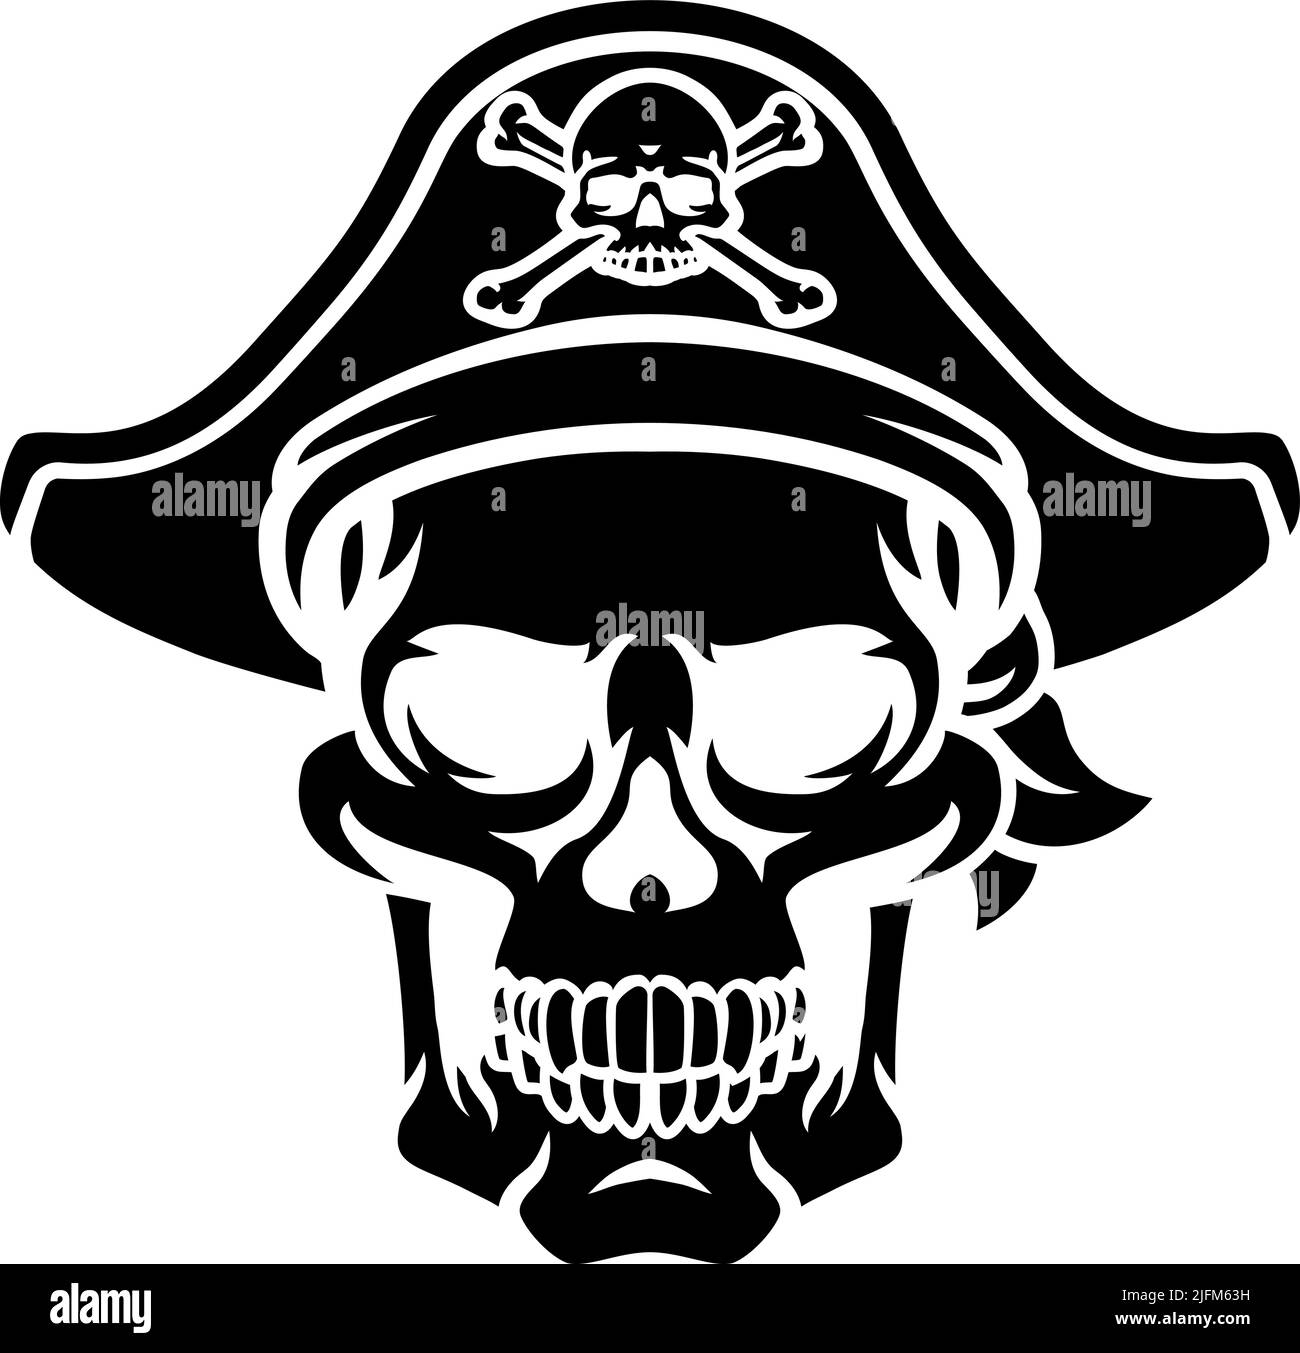 Pirate Hat Skull and Crossbones Cartoon Stock Vector Image & Art - Alamy